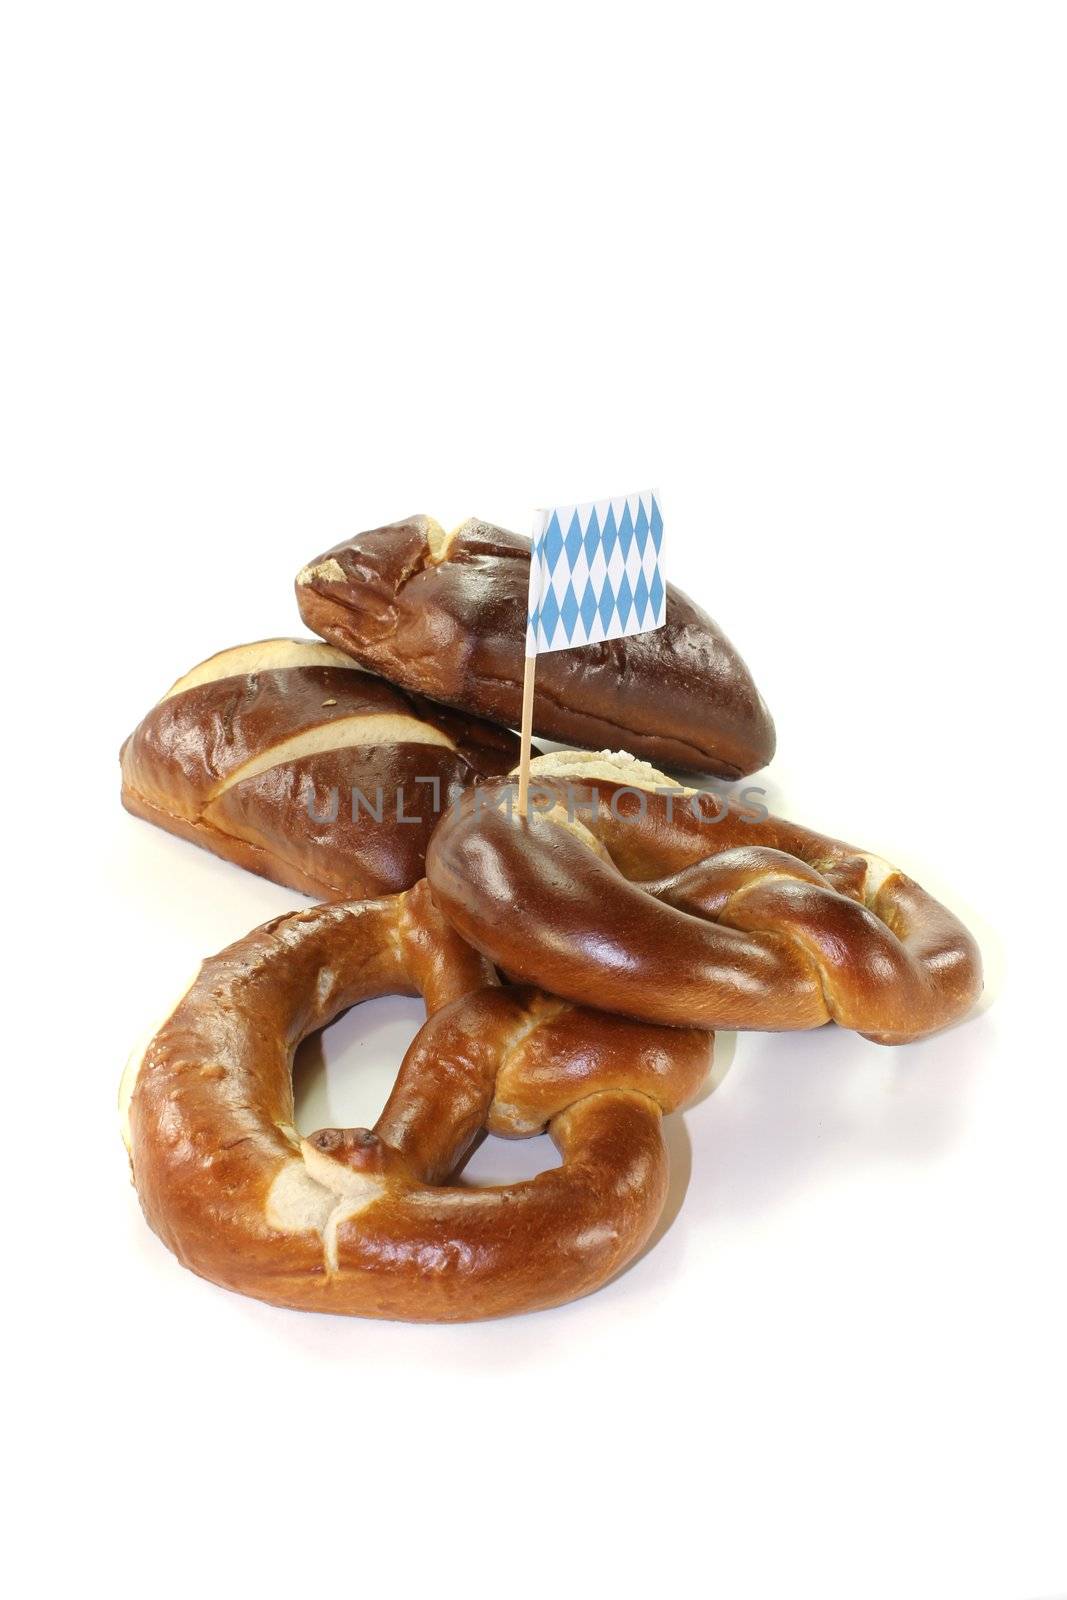 baked Bavarian pretzels on a bright background